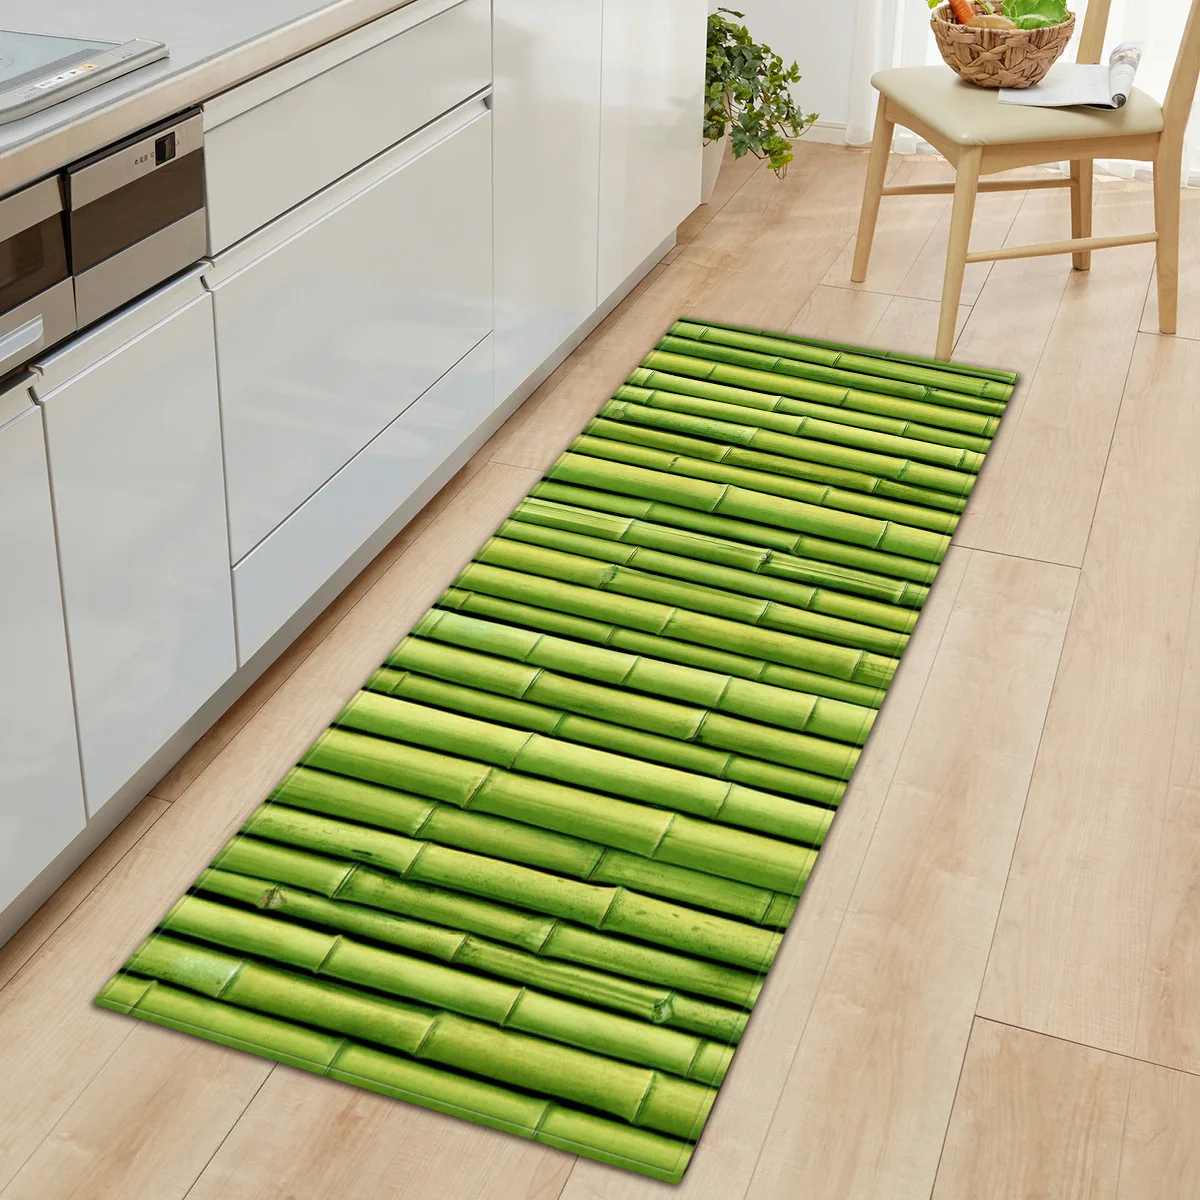 Bamboo Painting Welcome Doormat Long Floor Mats Kitchen Carpet Bedroom Bedside Mats Anti-slip Carpets For Living Room